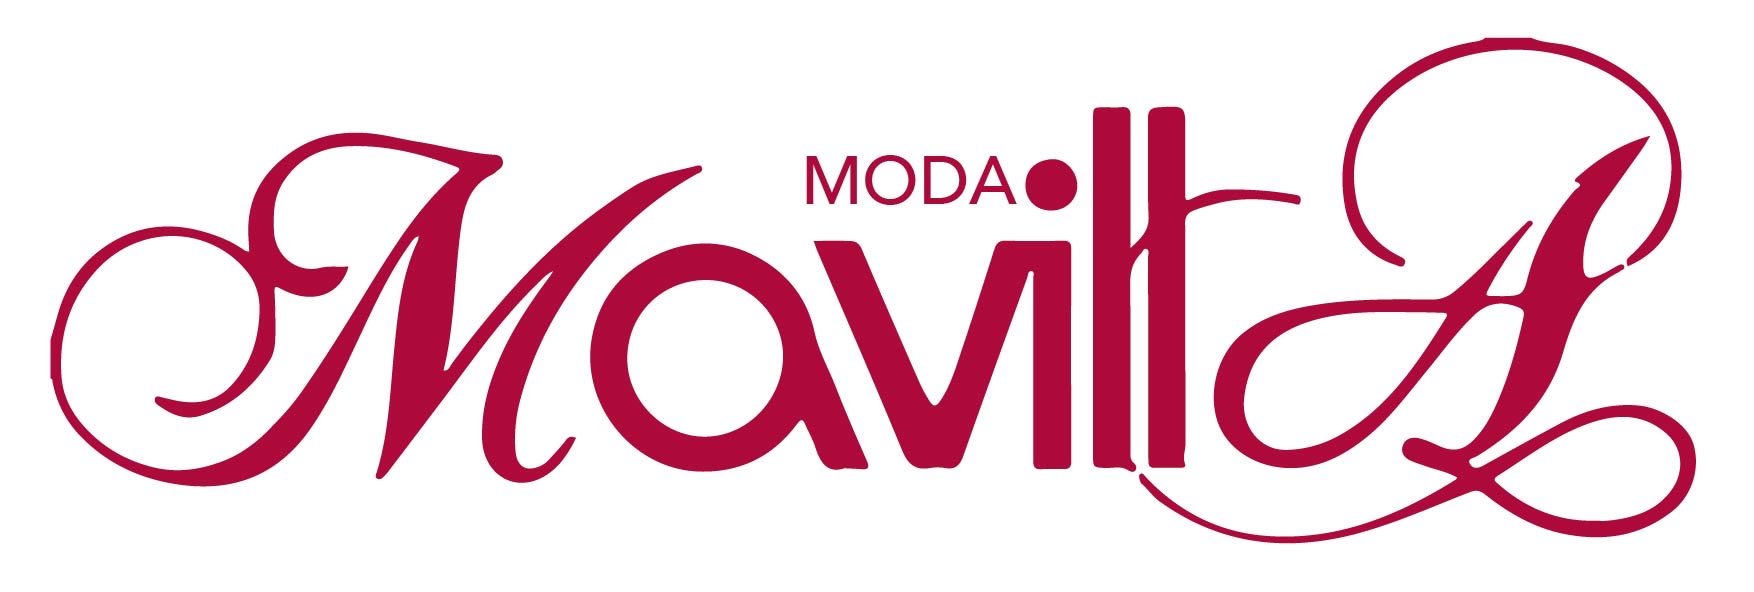 MODA MavillA